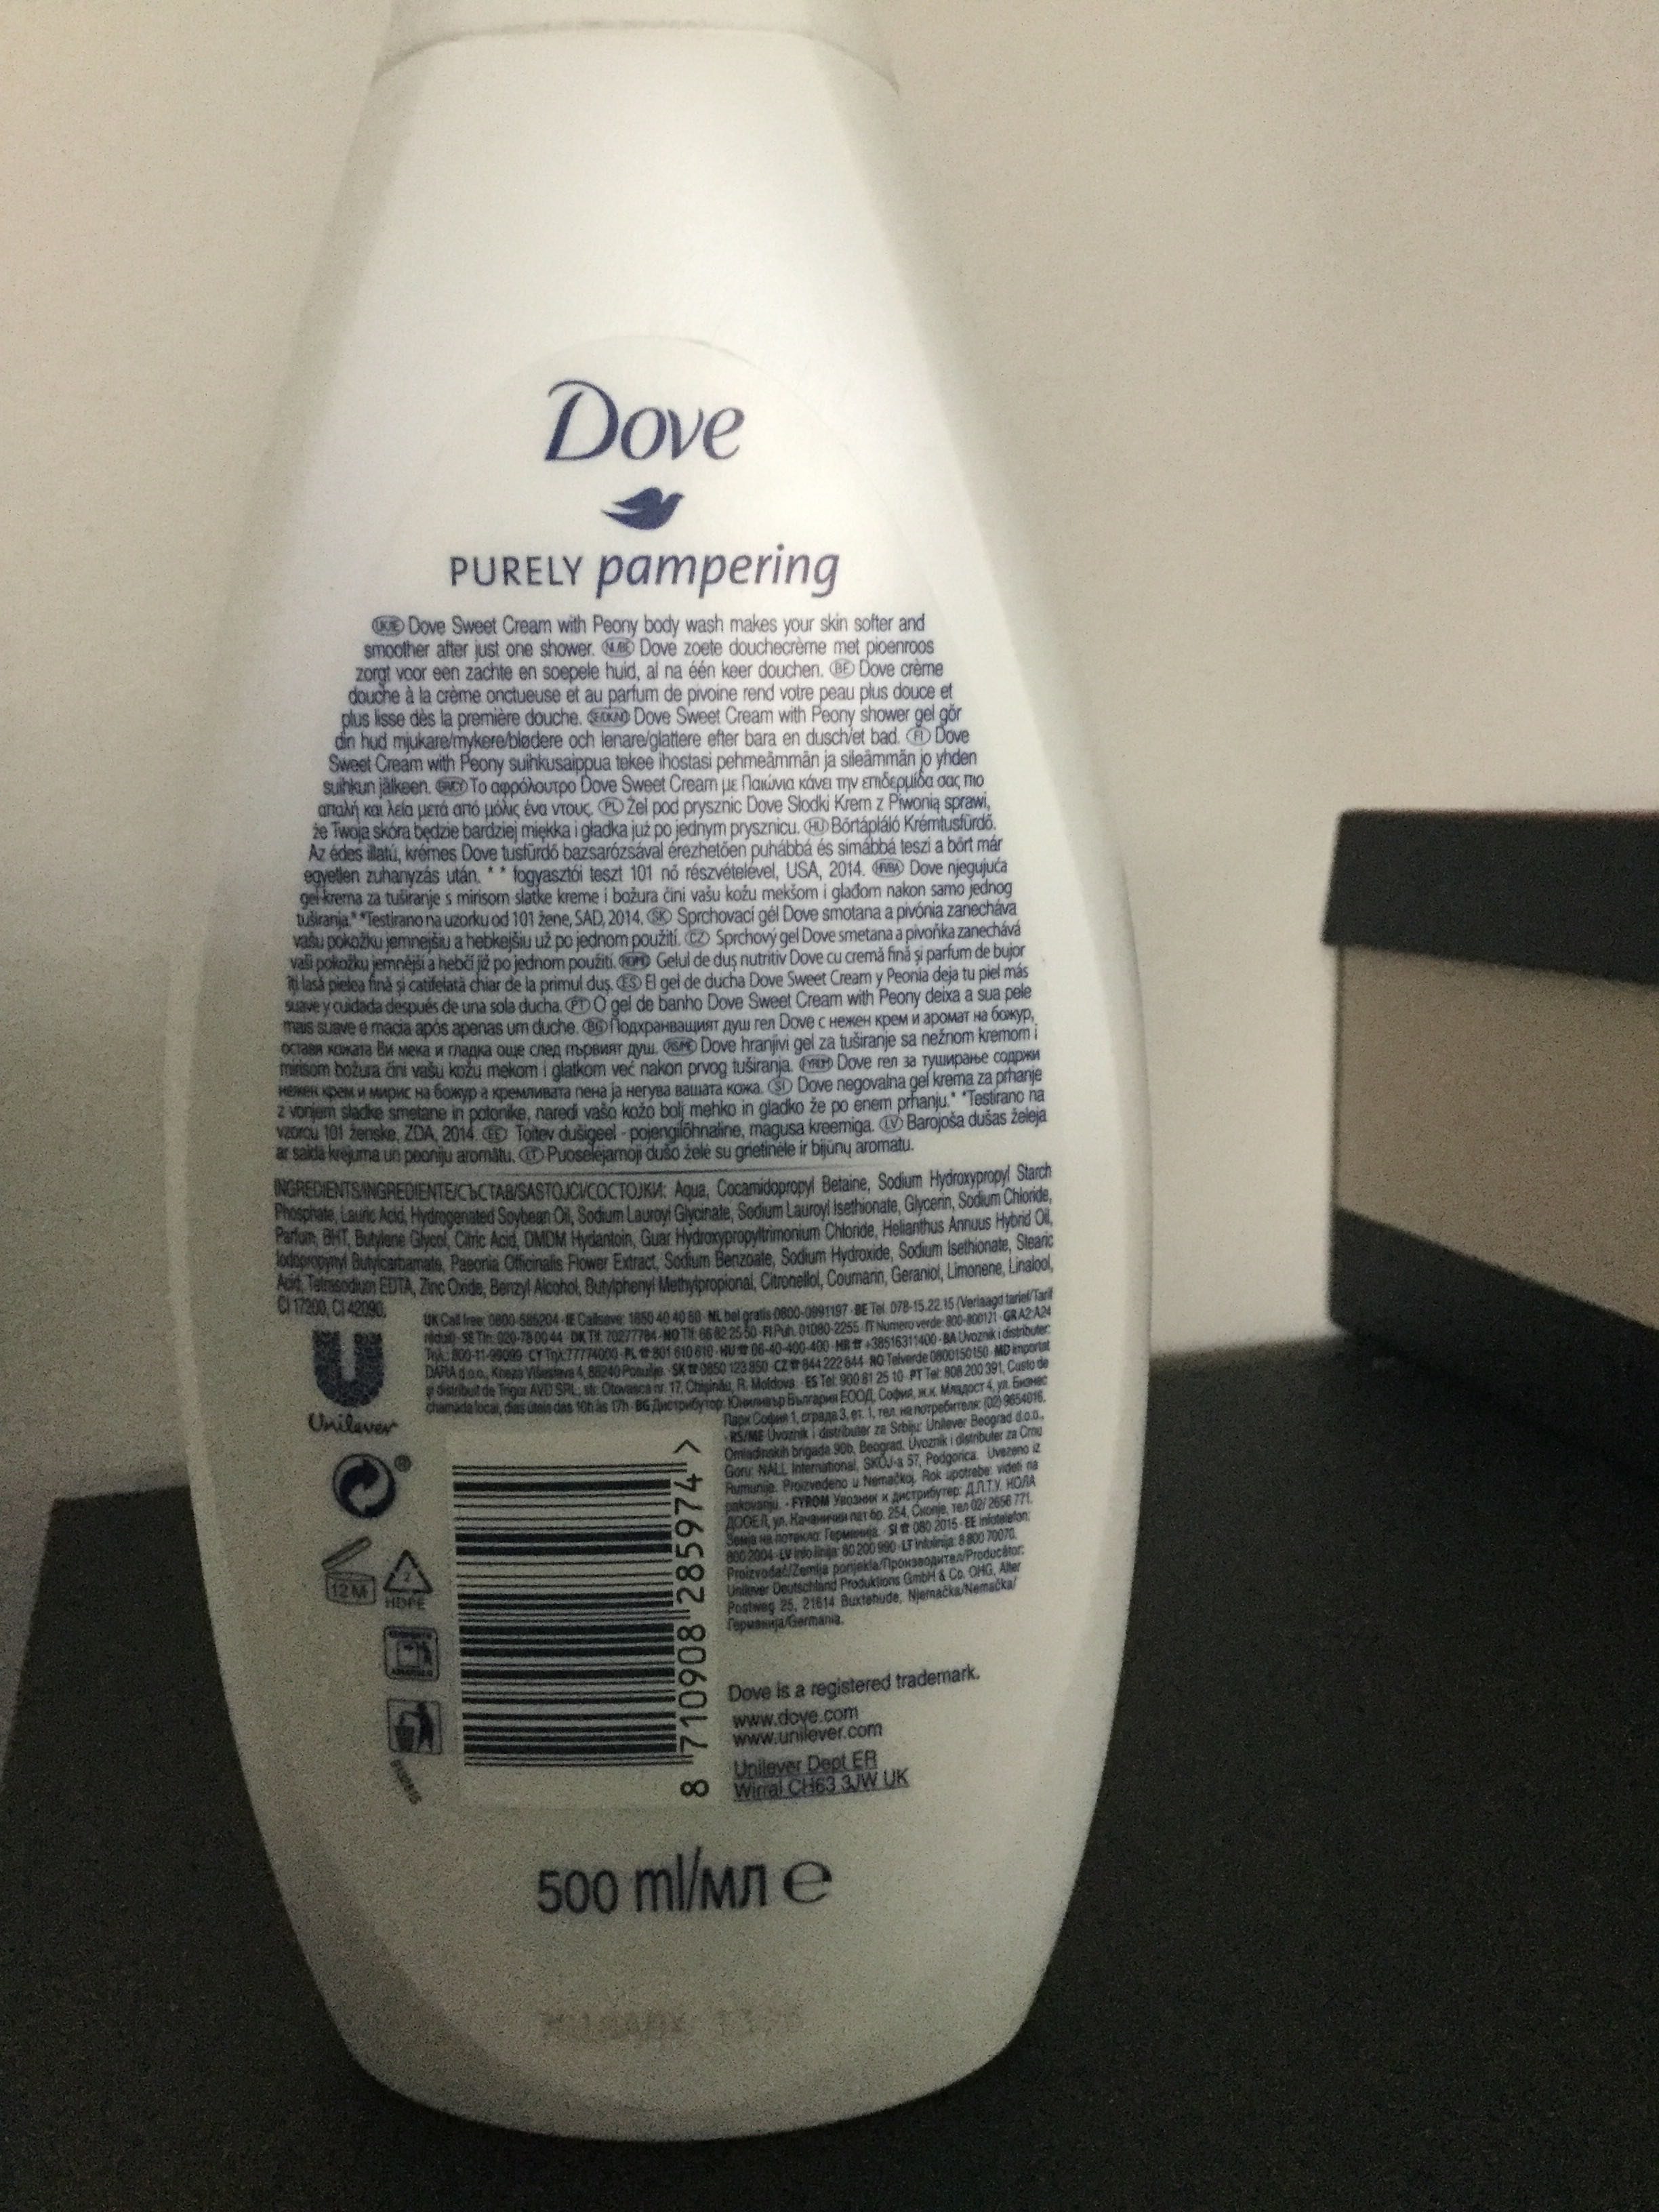 Purely pampering gel douche - Produkt - fr